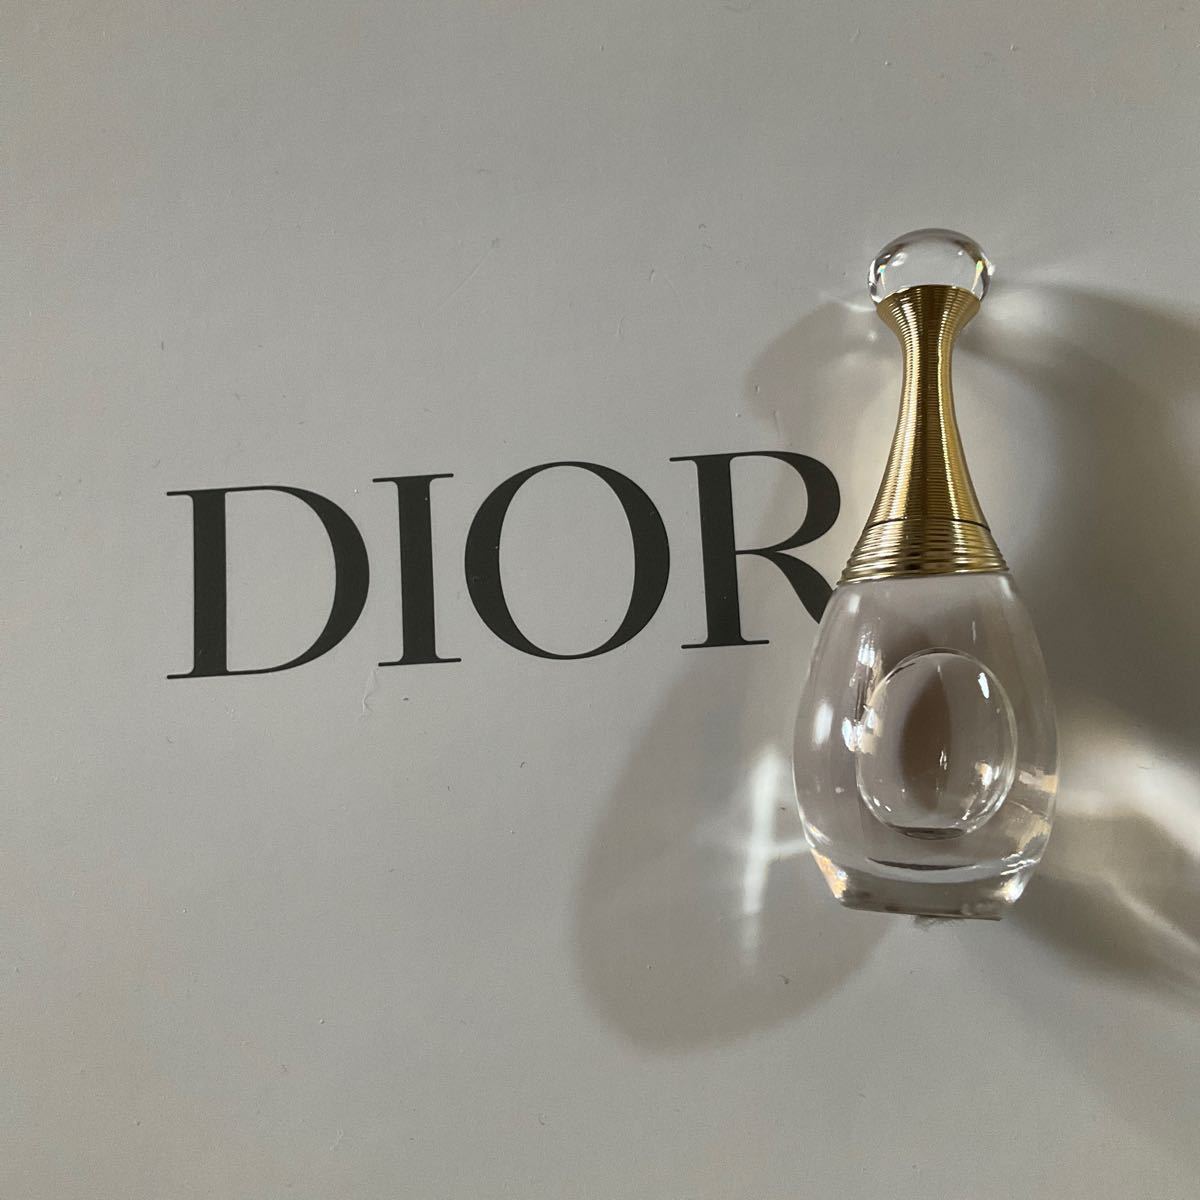 Dior ディオール ジャドール オードゥ パルファン 香水 5mL